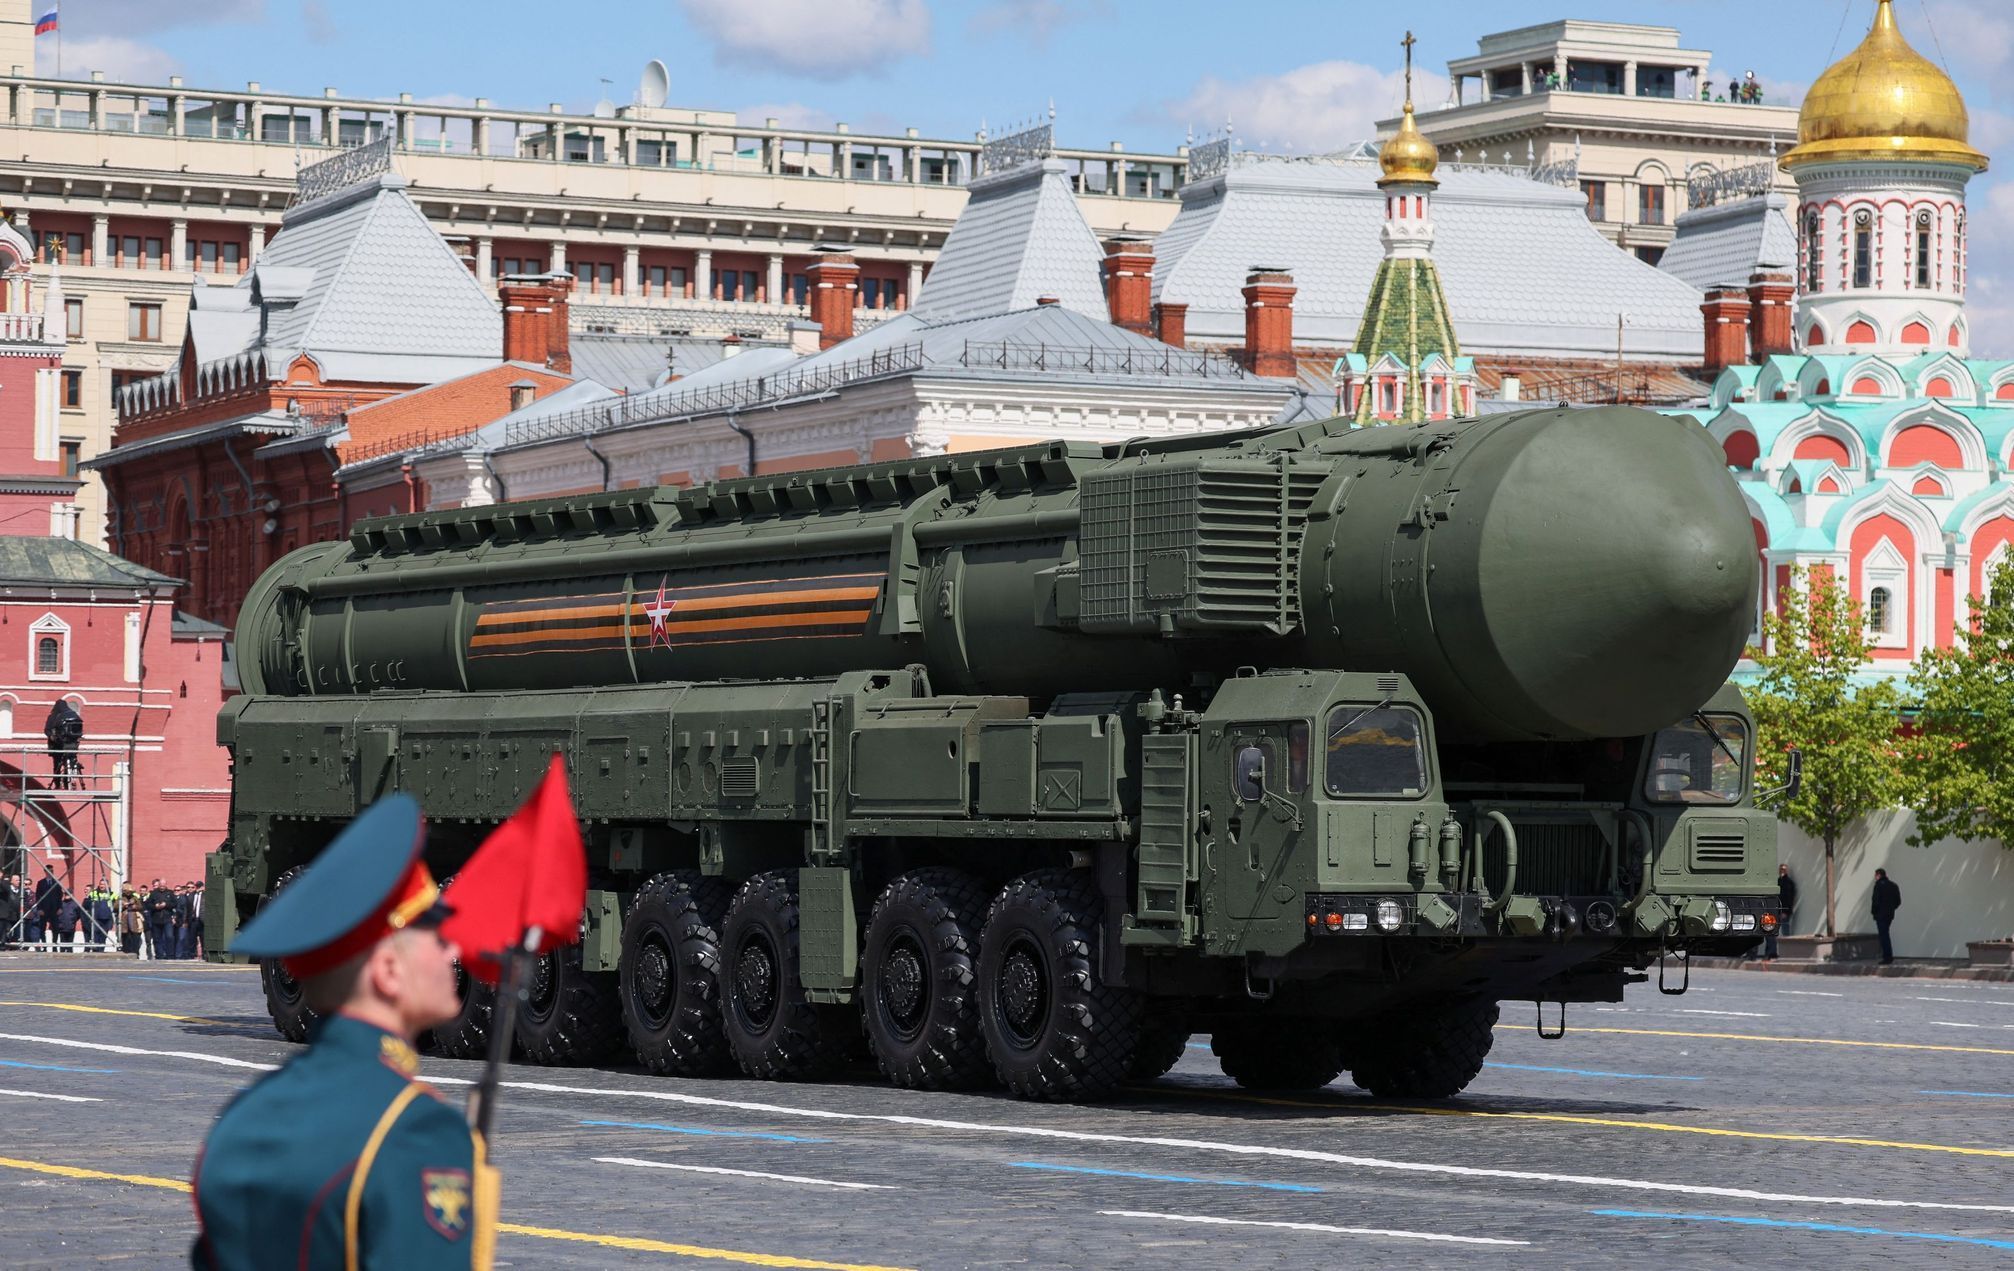 Rusko, raketa, Jars, jaderné zbraně